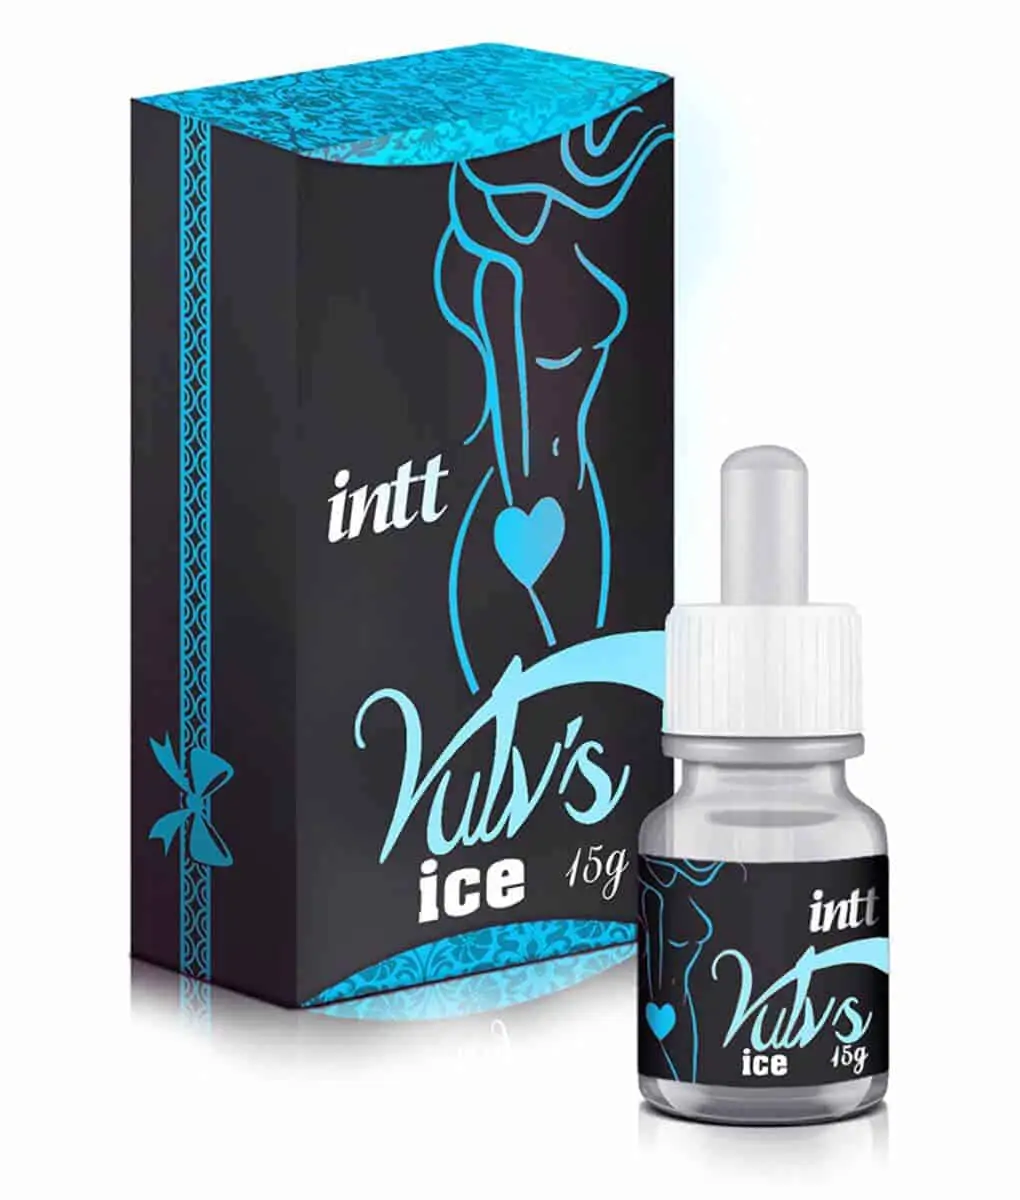 Vulv’s ICE Intt - Excitante feminino com Feromônios